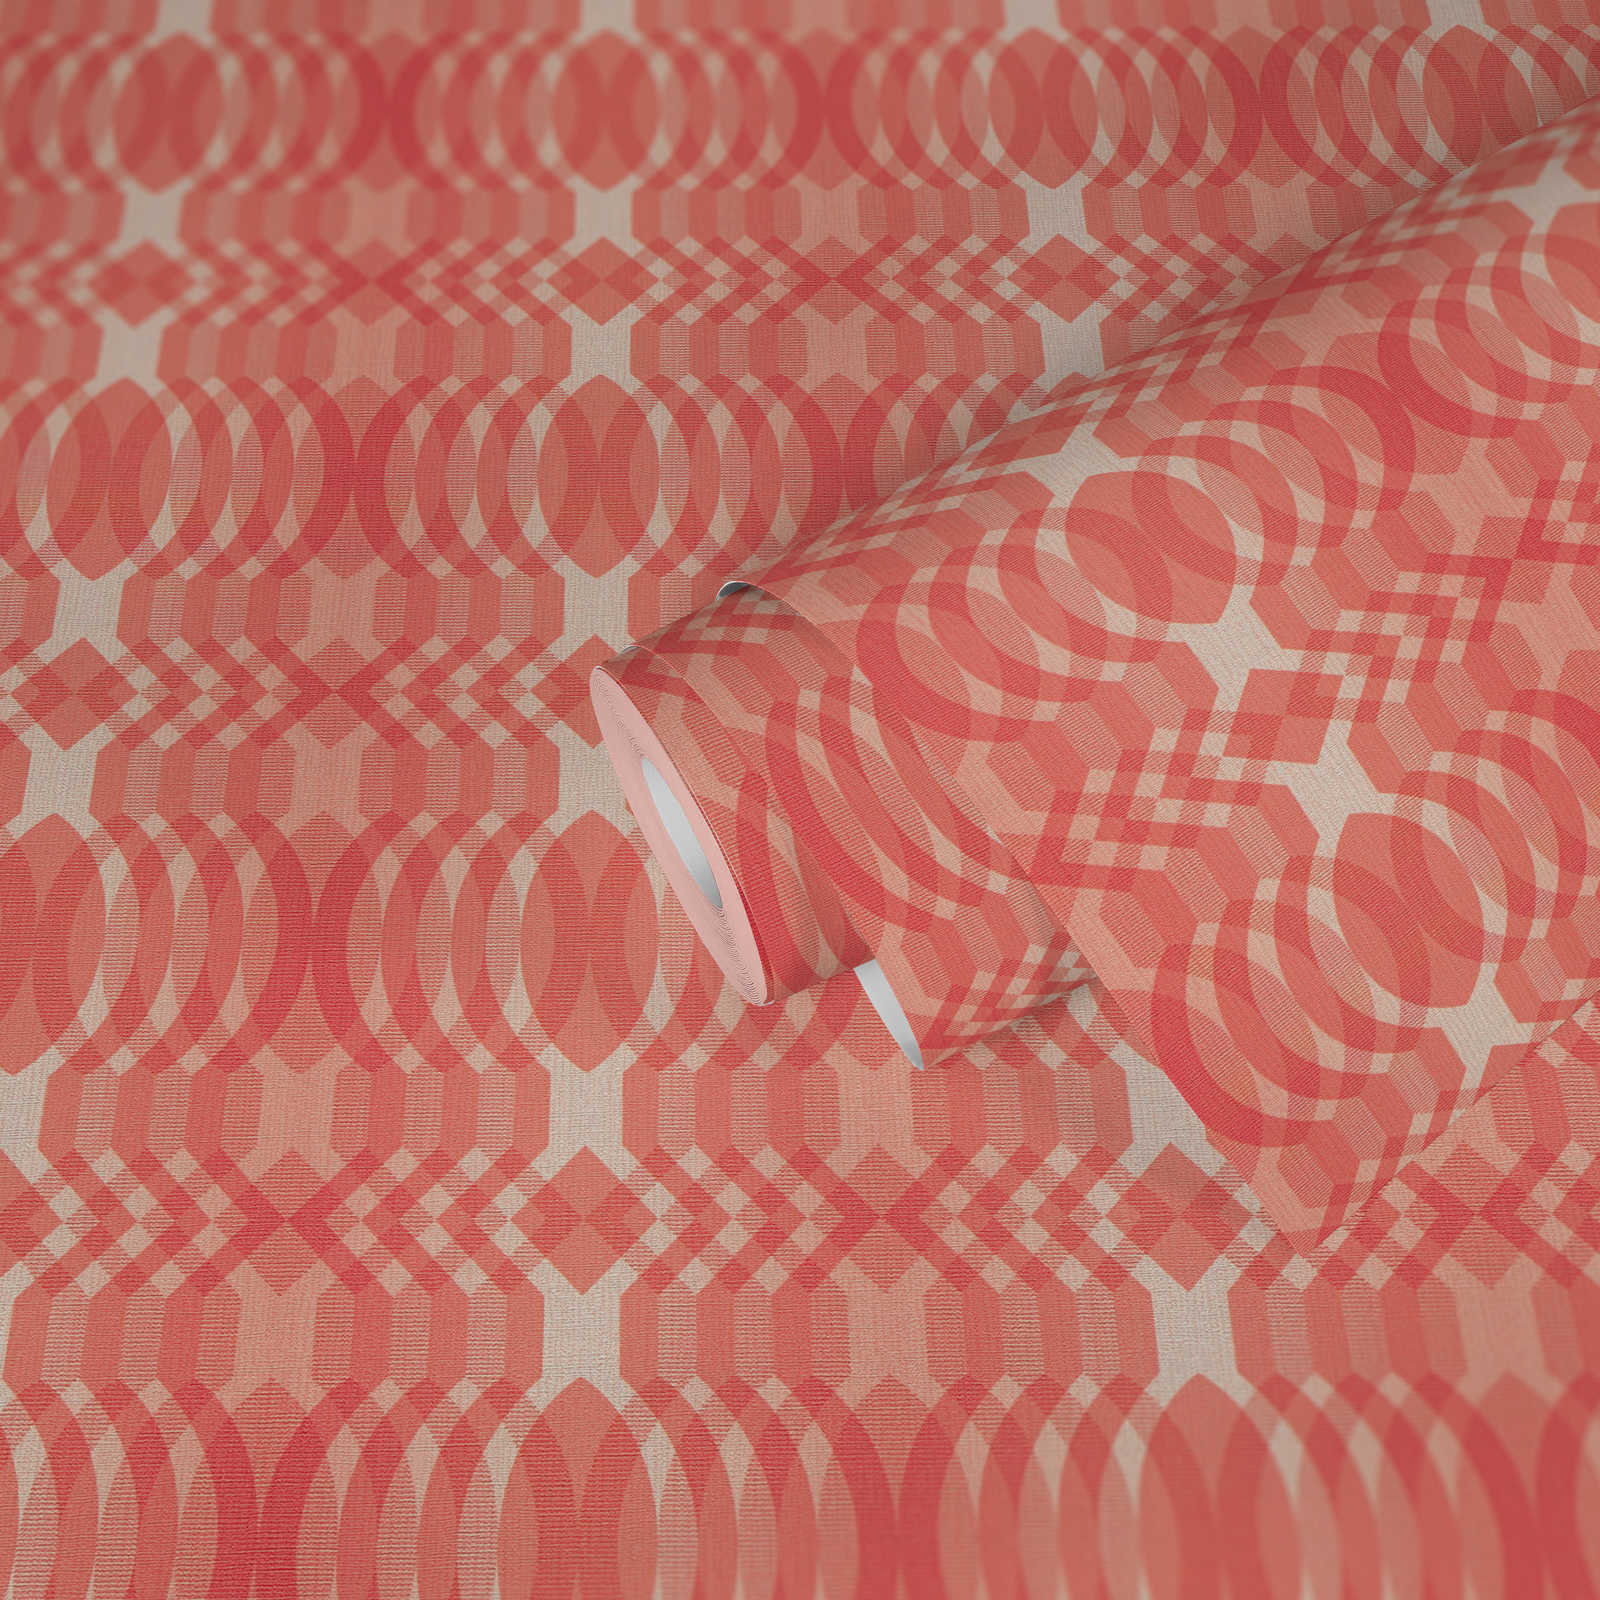             Geometrisch patroon op vliesbehang in retrostijl - rood, crème, wit
        